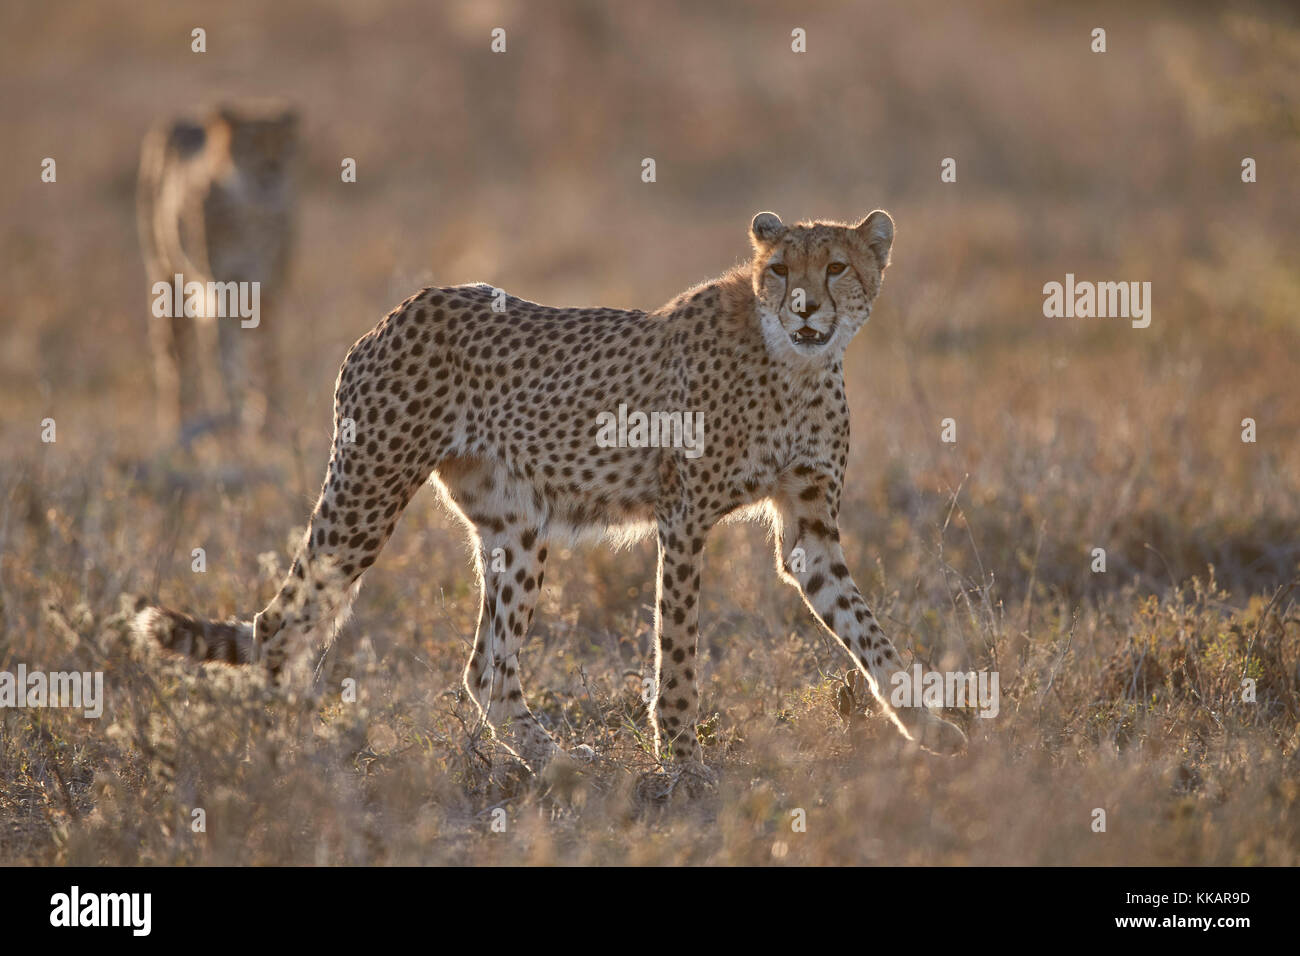 Two Cheetah (Acinonyx jubatus), Ngorongoro Conservation Area, Tanzania, East Africa, Africa Stock Photo